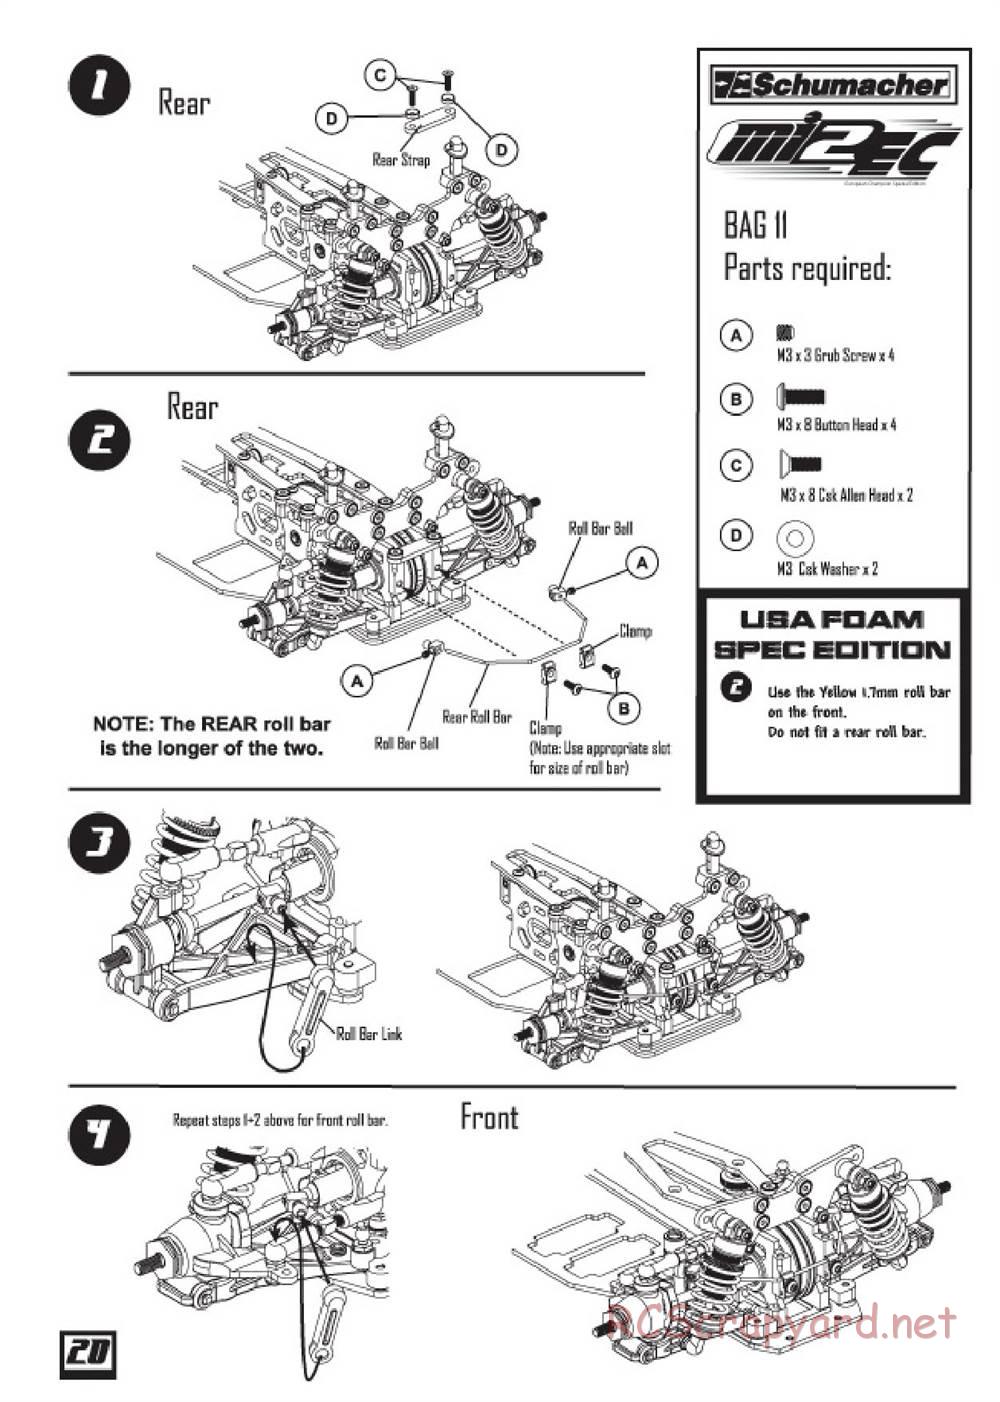 Schumacher - Mi2 EC - Manual - Page 22